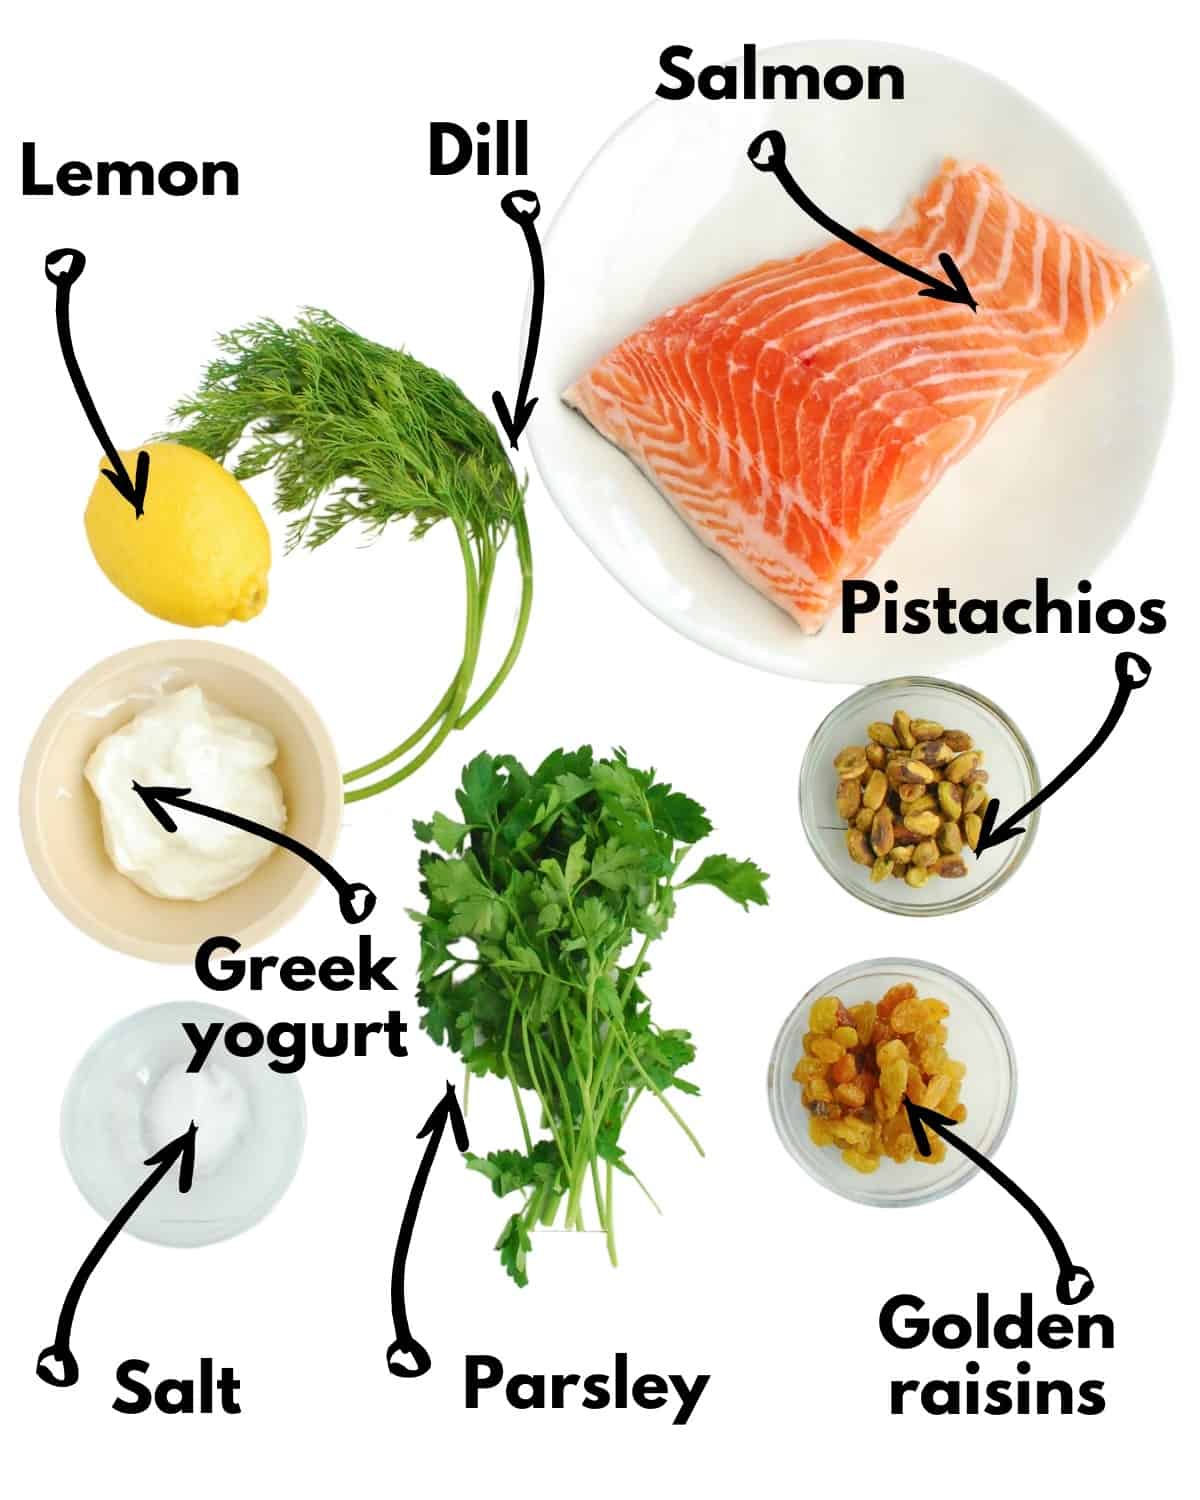 Salmon, lemon, dill, parsley, yogurt, salt, pistachios, and golden raisins on a white backdrop.